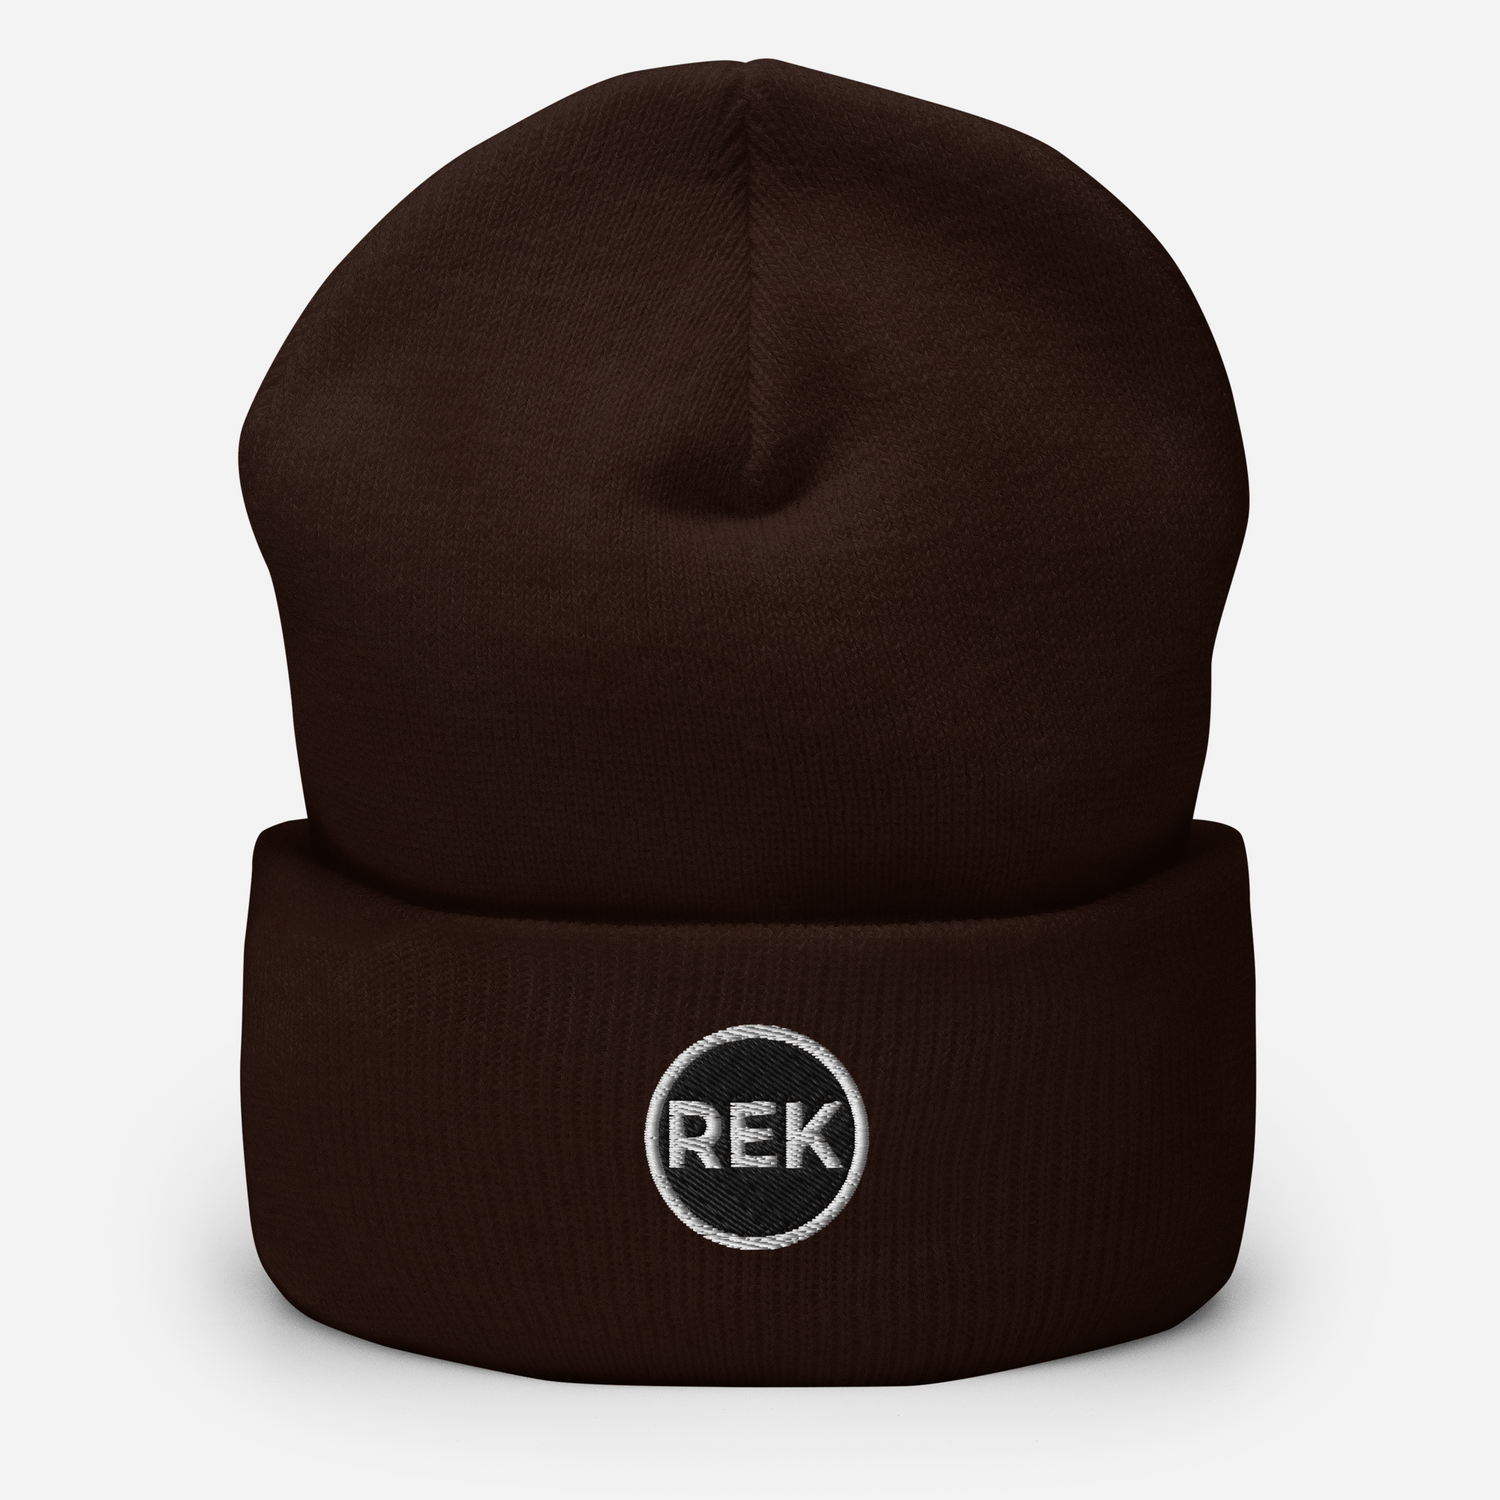 REK Cosmetics Cuffed Beanie | REK Cosmetics - Premium Hat from REK Cosmetics - Just $20! Shop now at REK Cosmetics